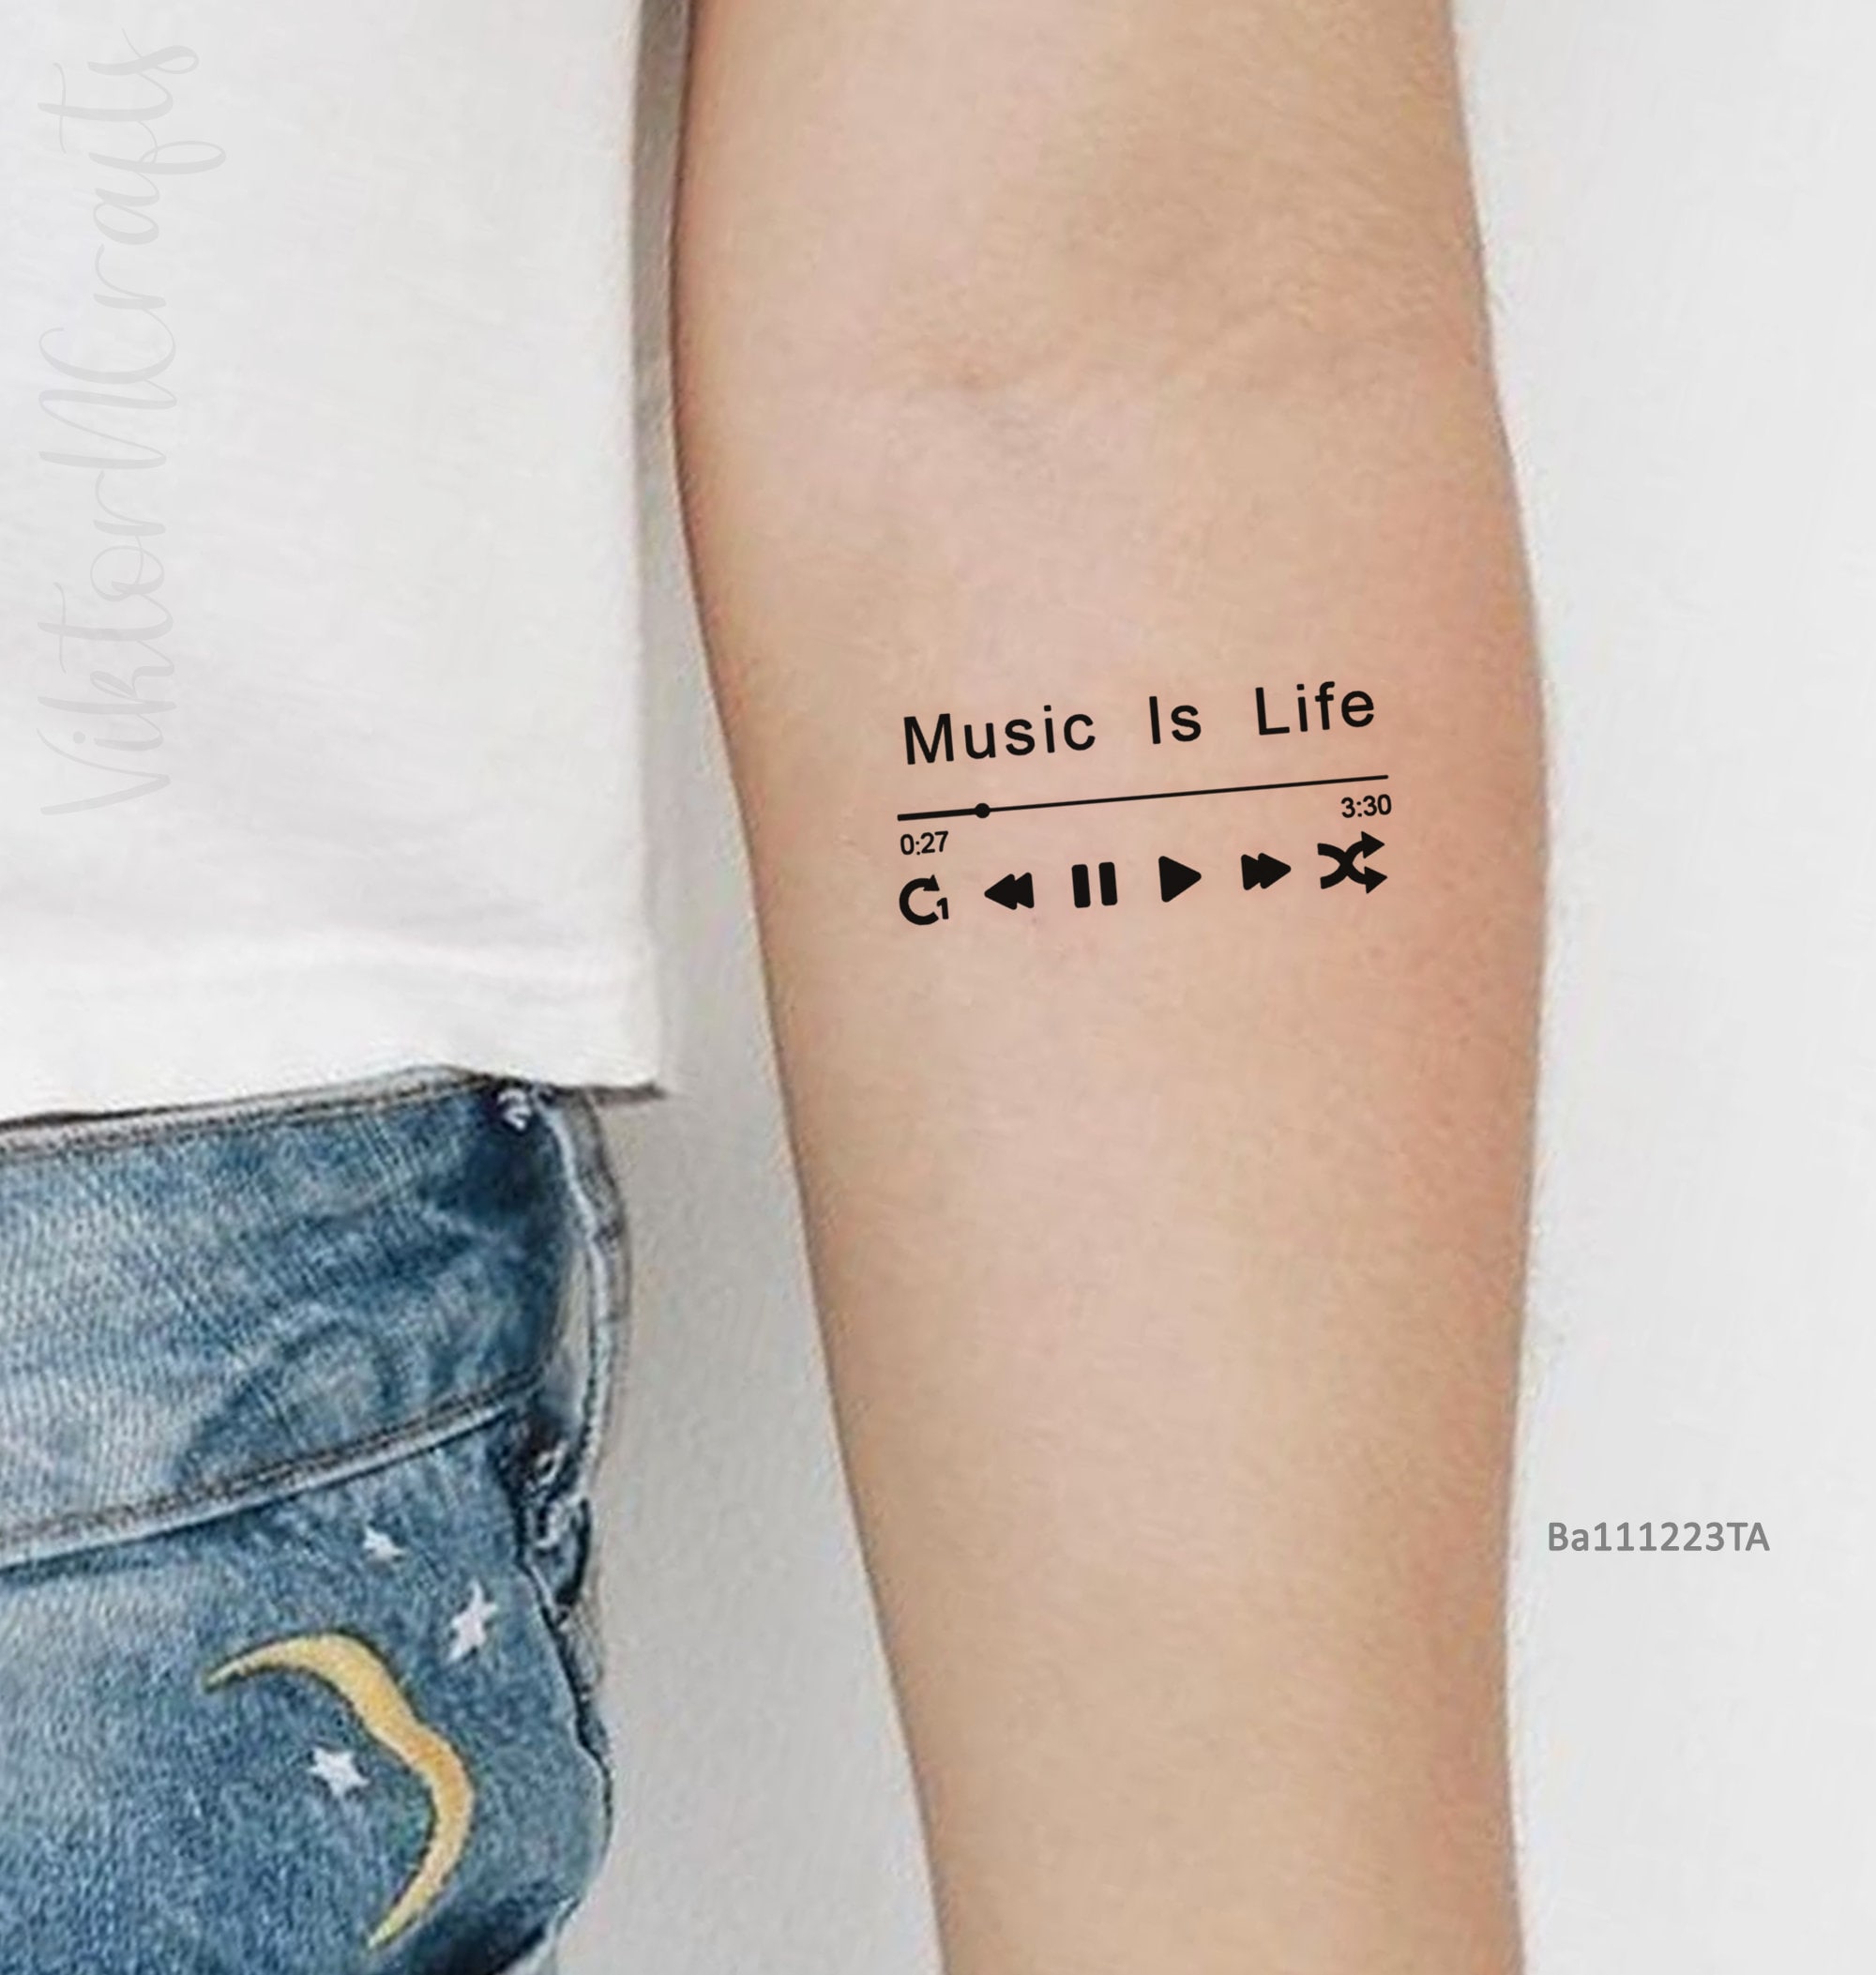 40 Simple Music Tattoos for Men - Musical Ink Design Ideas